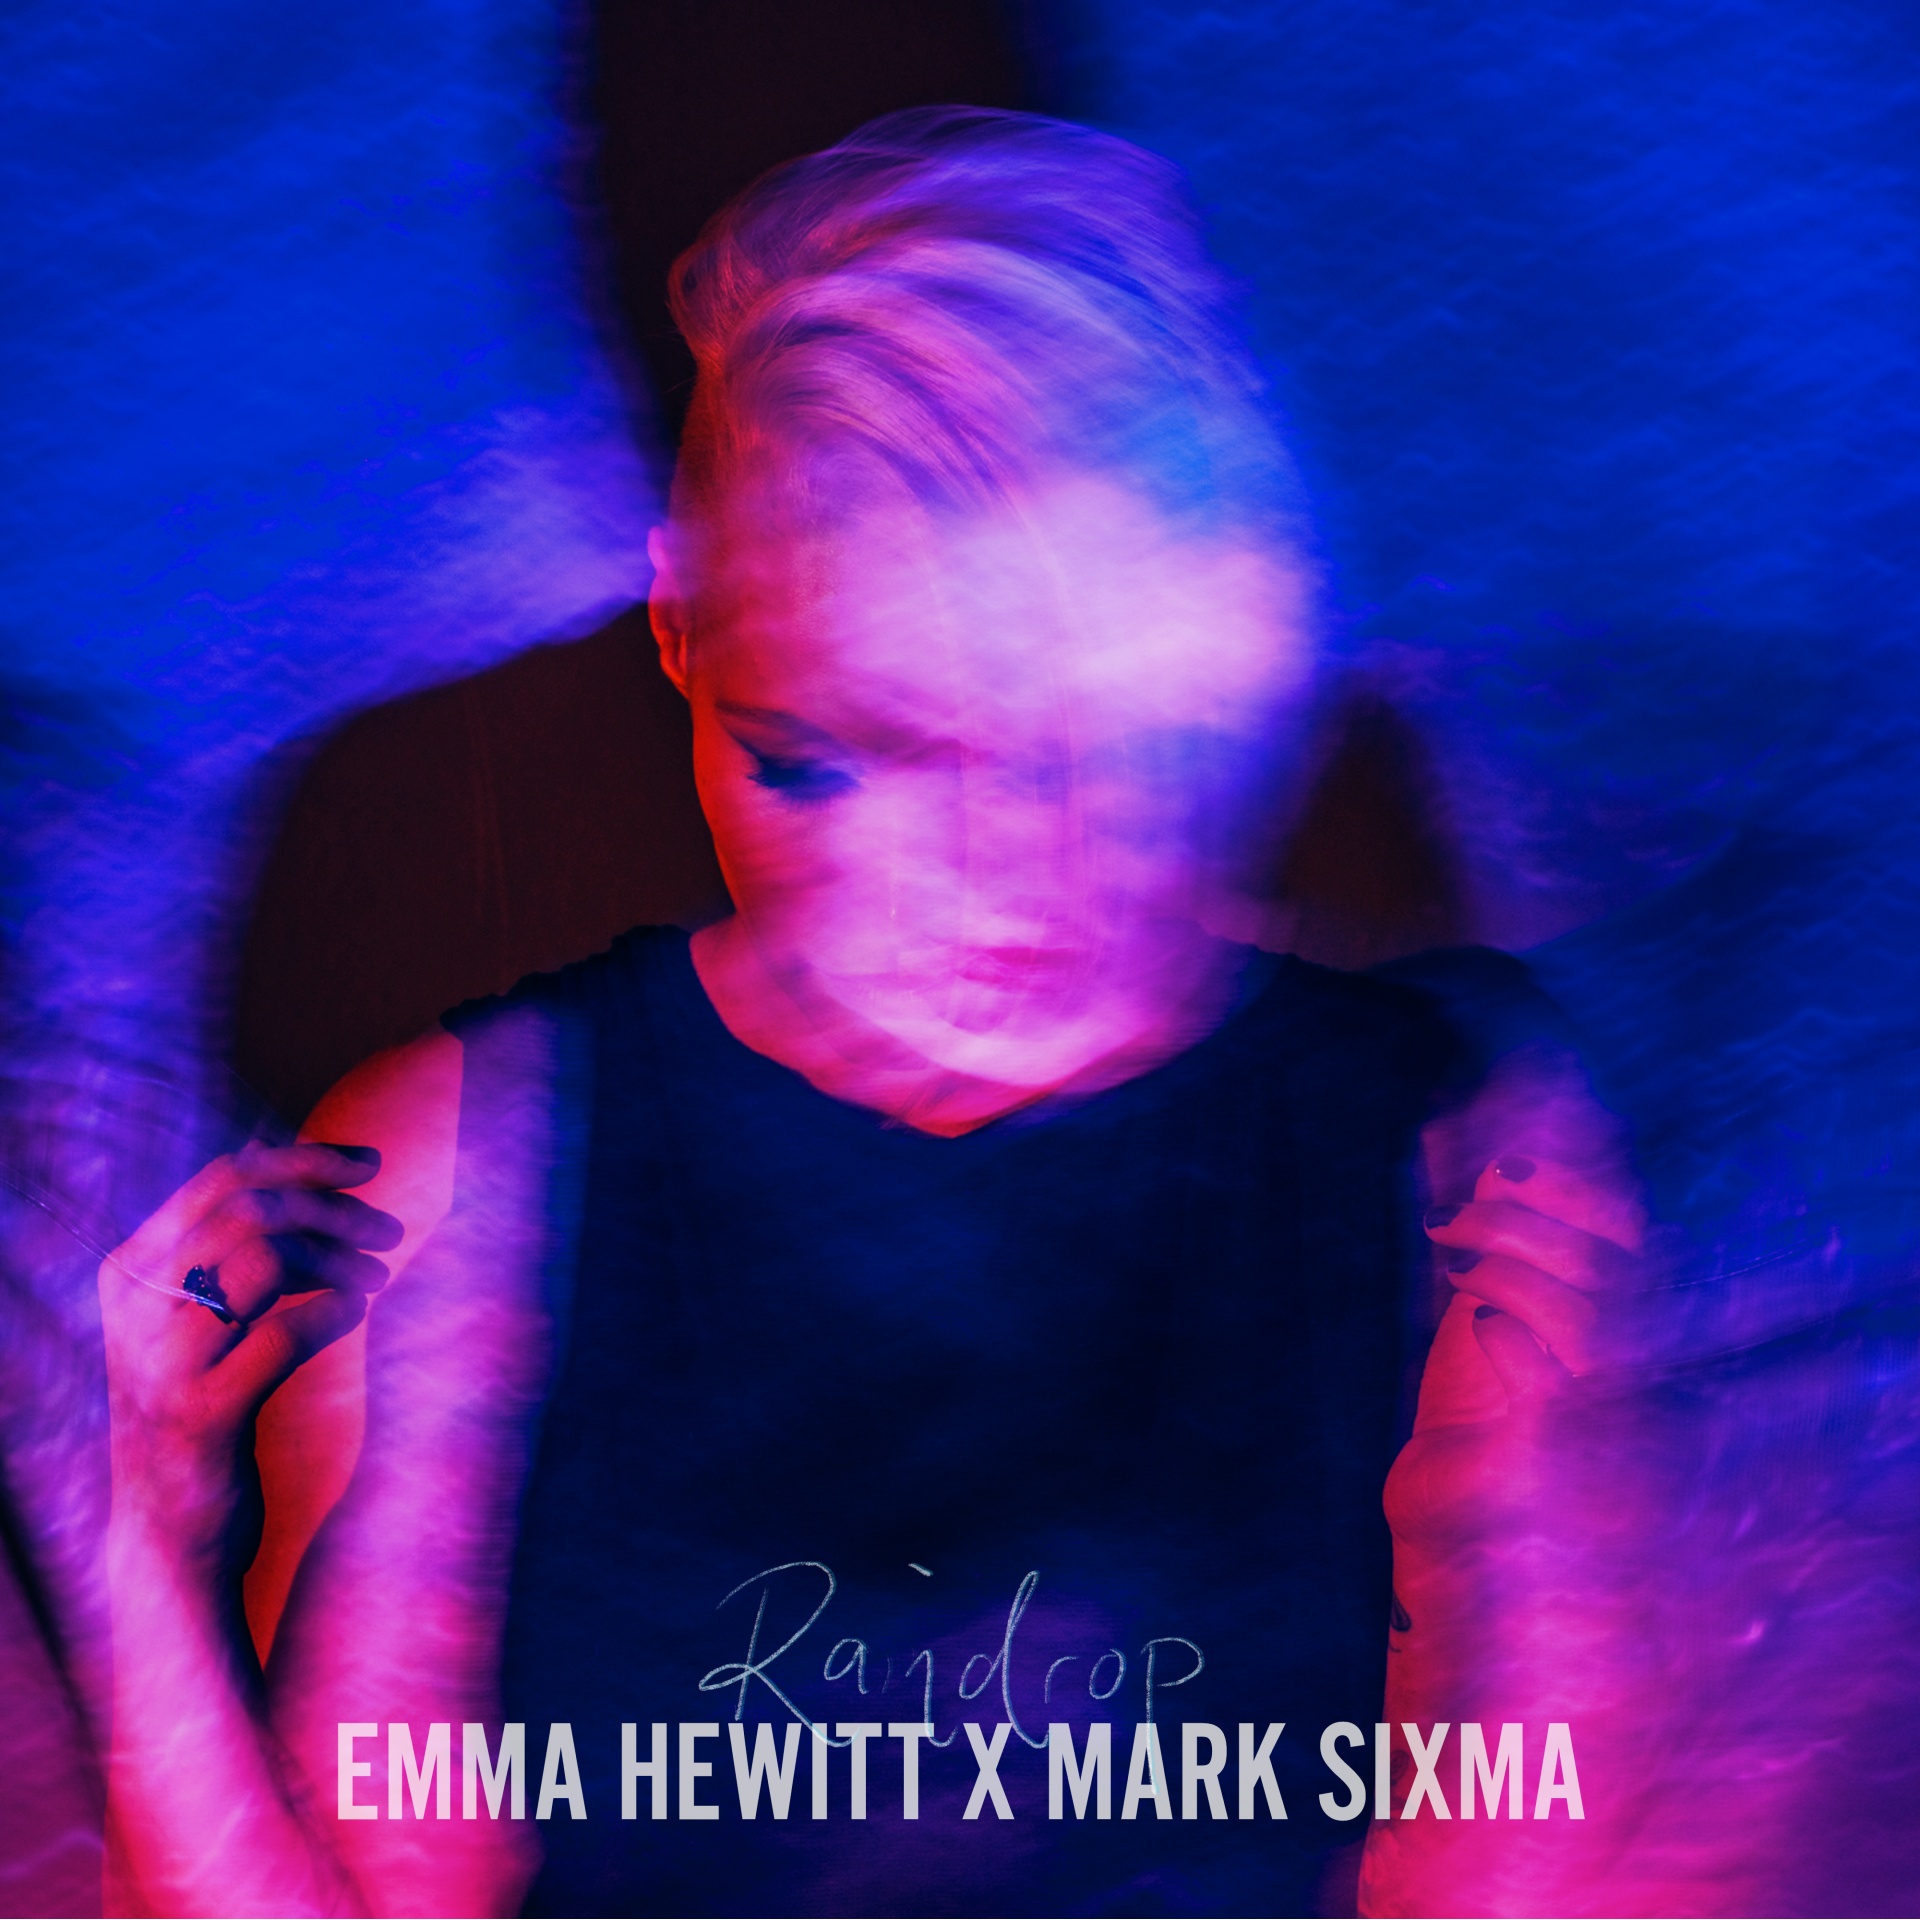 Mark Sixma & Emma Hewitt Team Up On Festival Anthem “Raindrops”